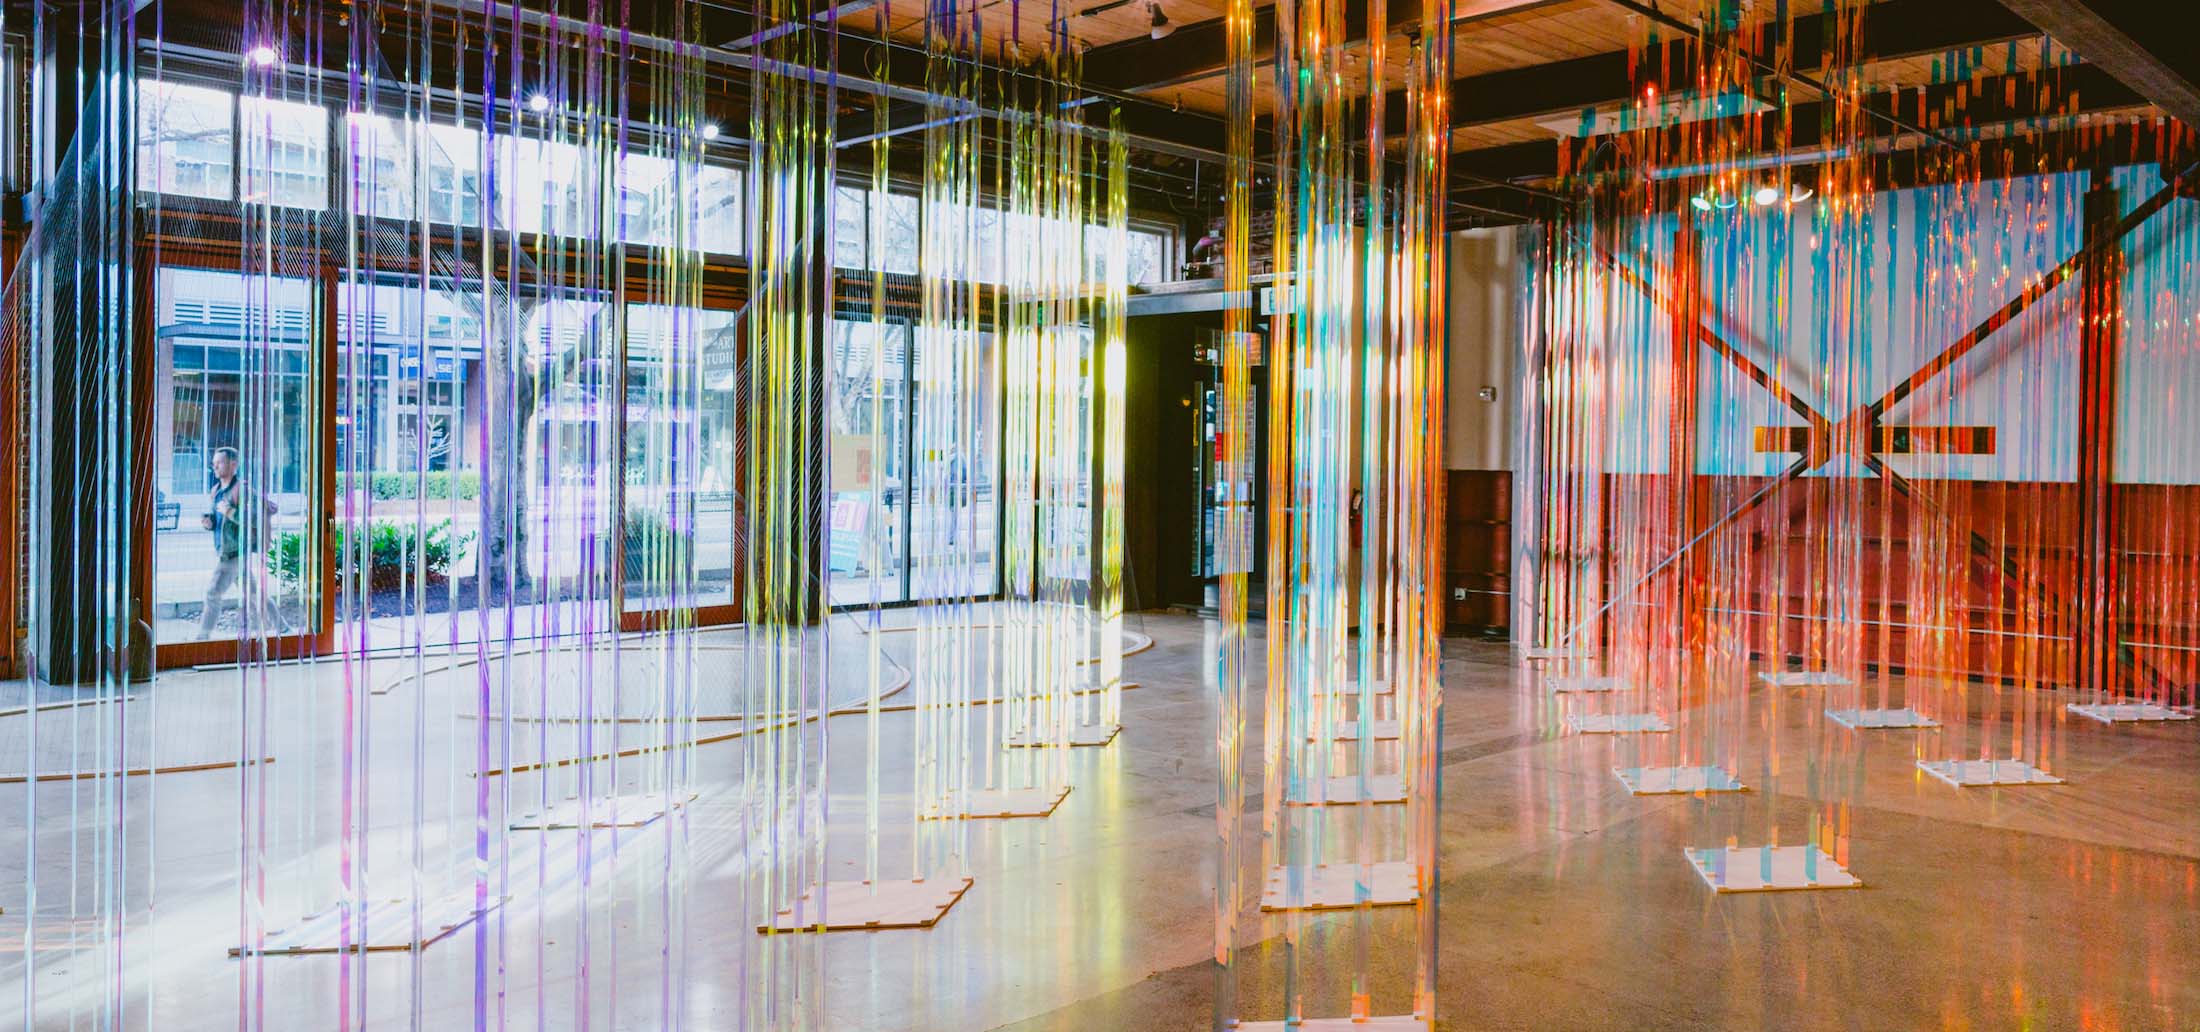 Colorful art installation of acrylic pillars to wander through.